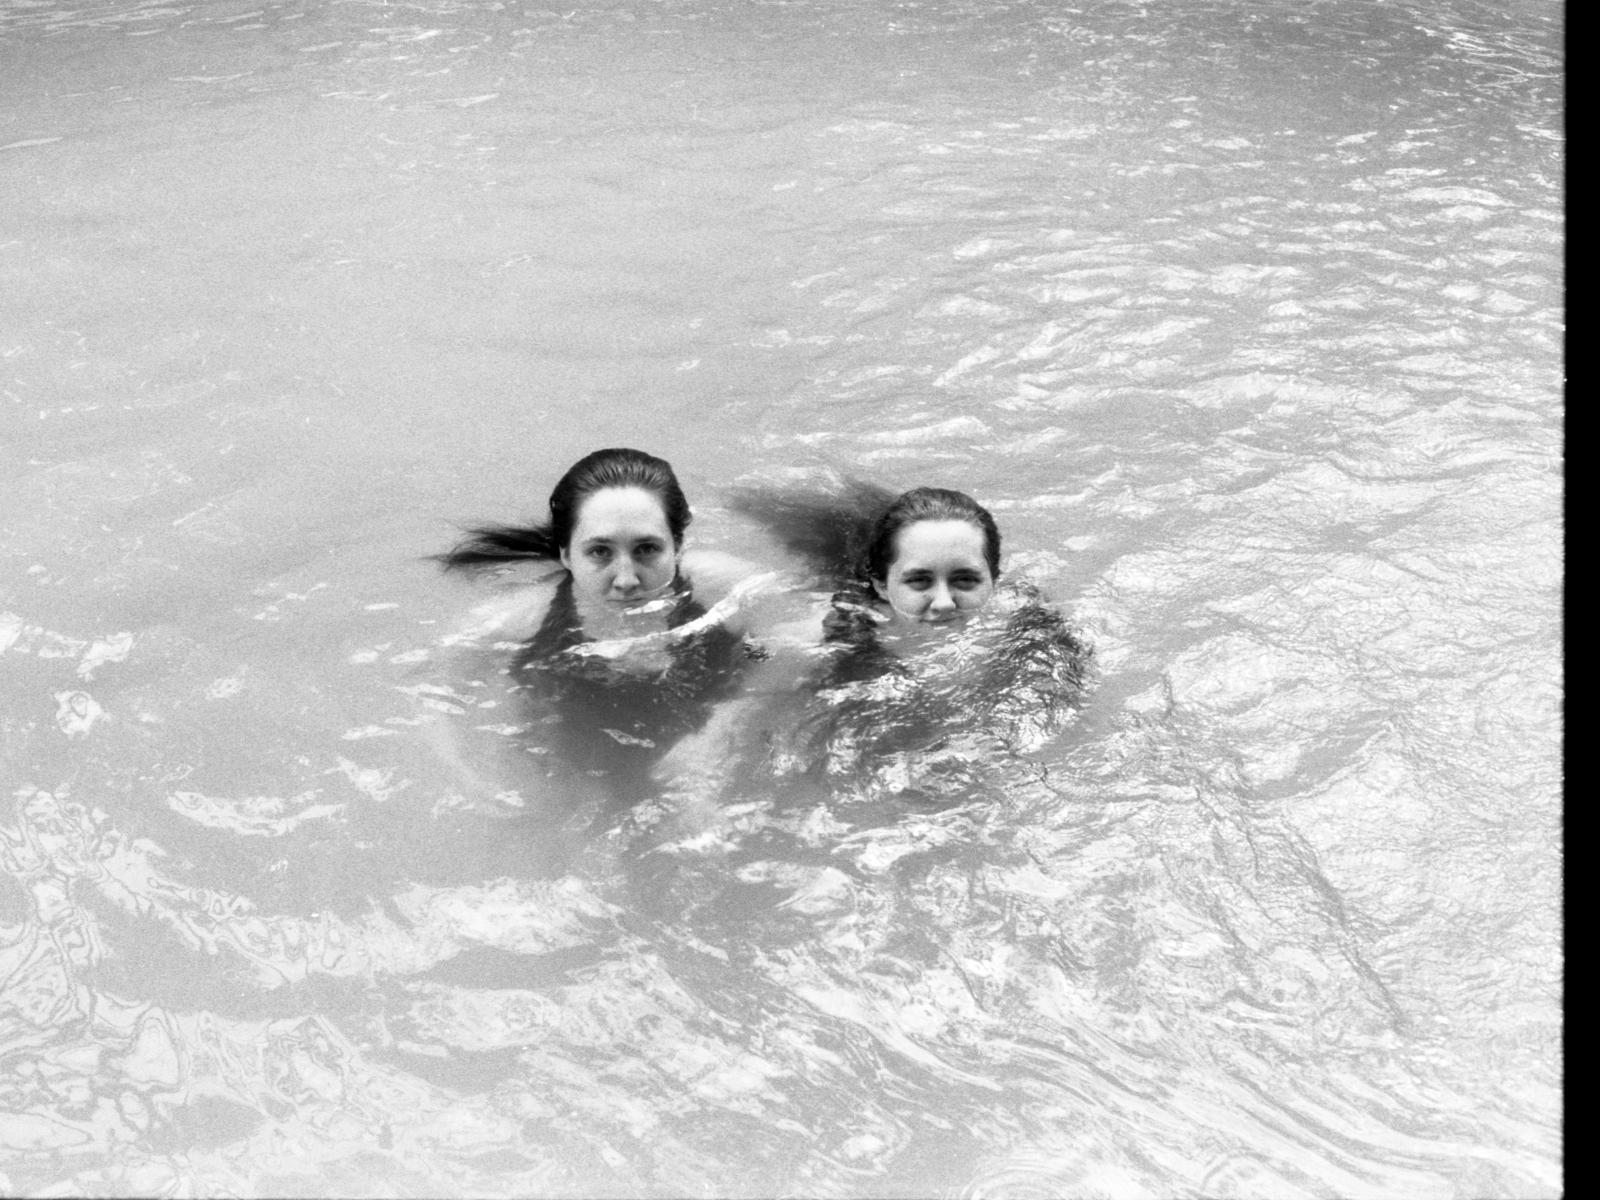 Zandra &amp; I in the Pool. Summer 2020.